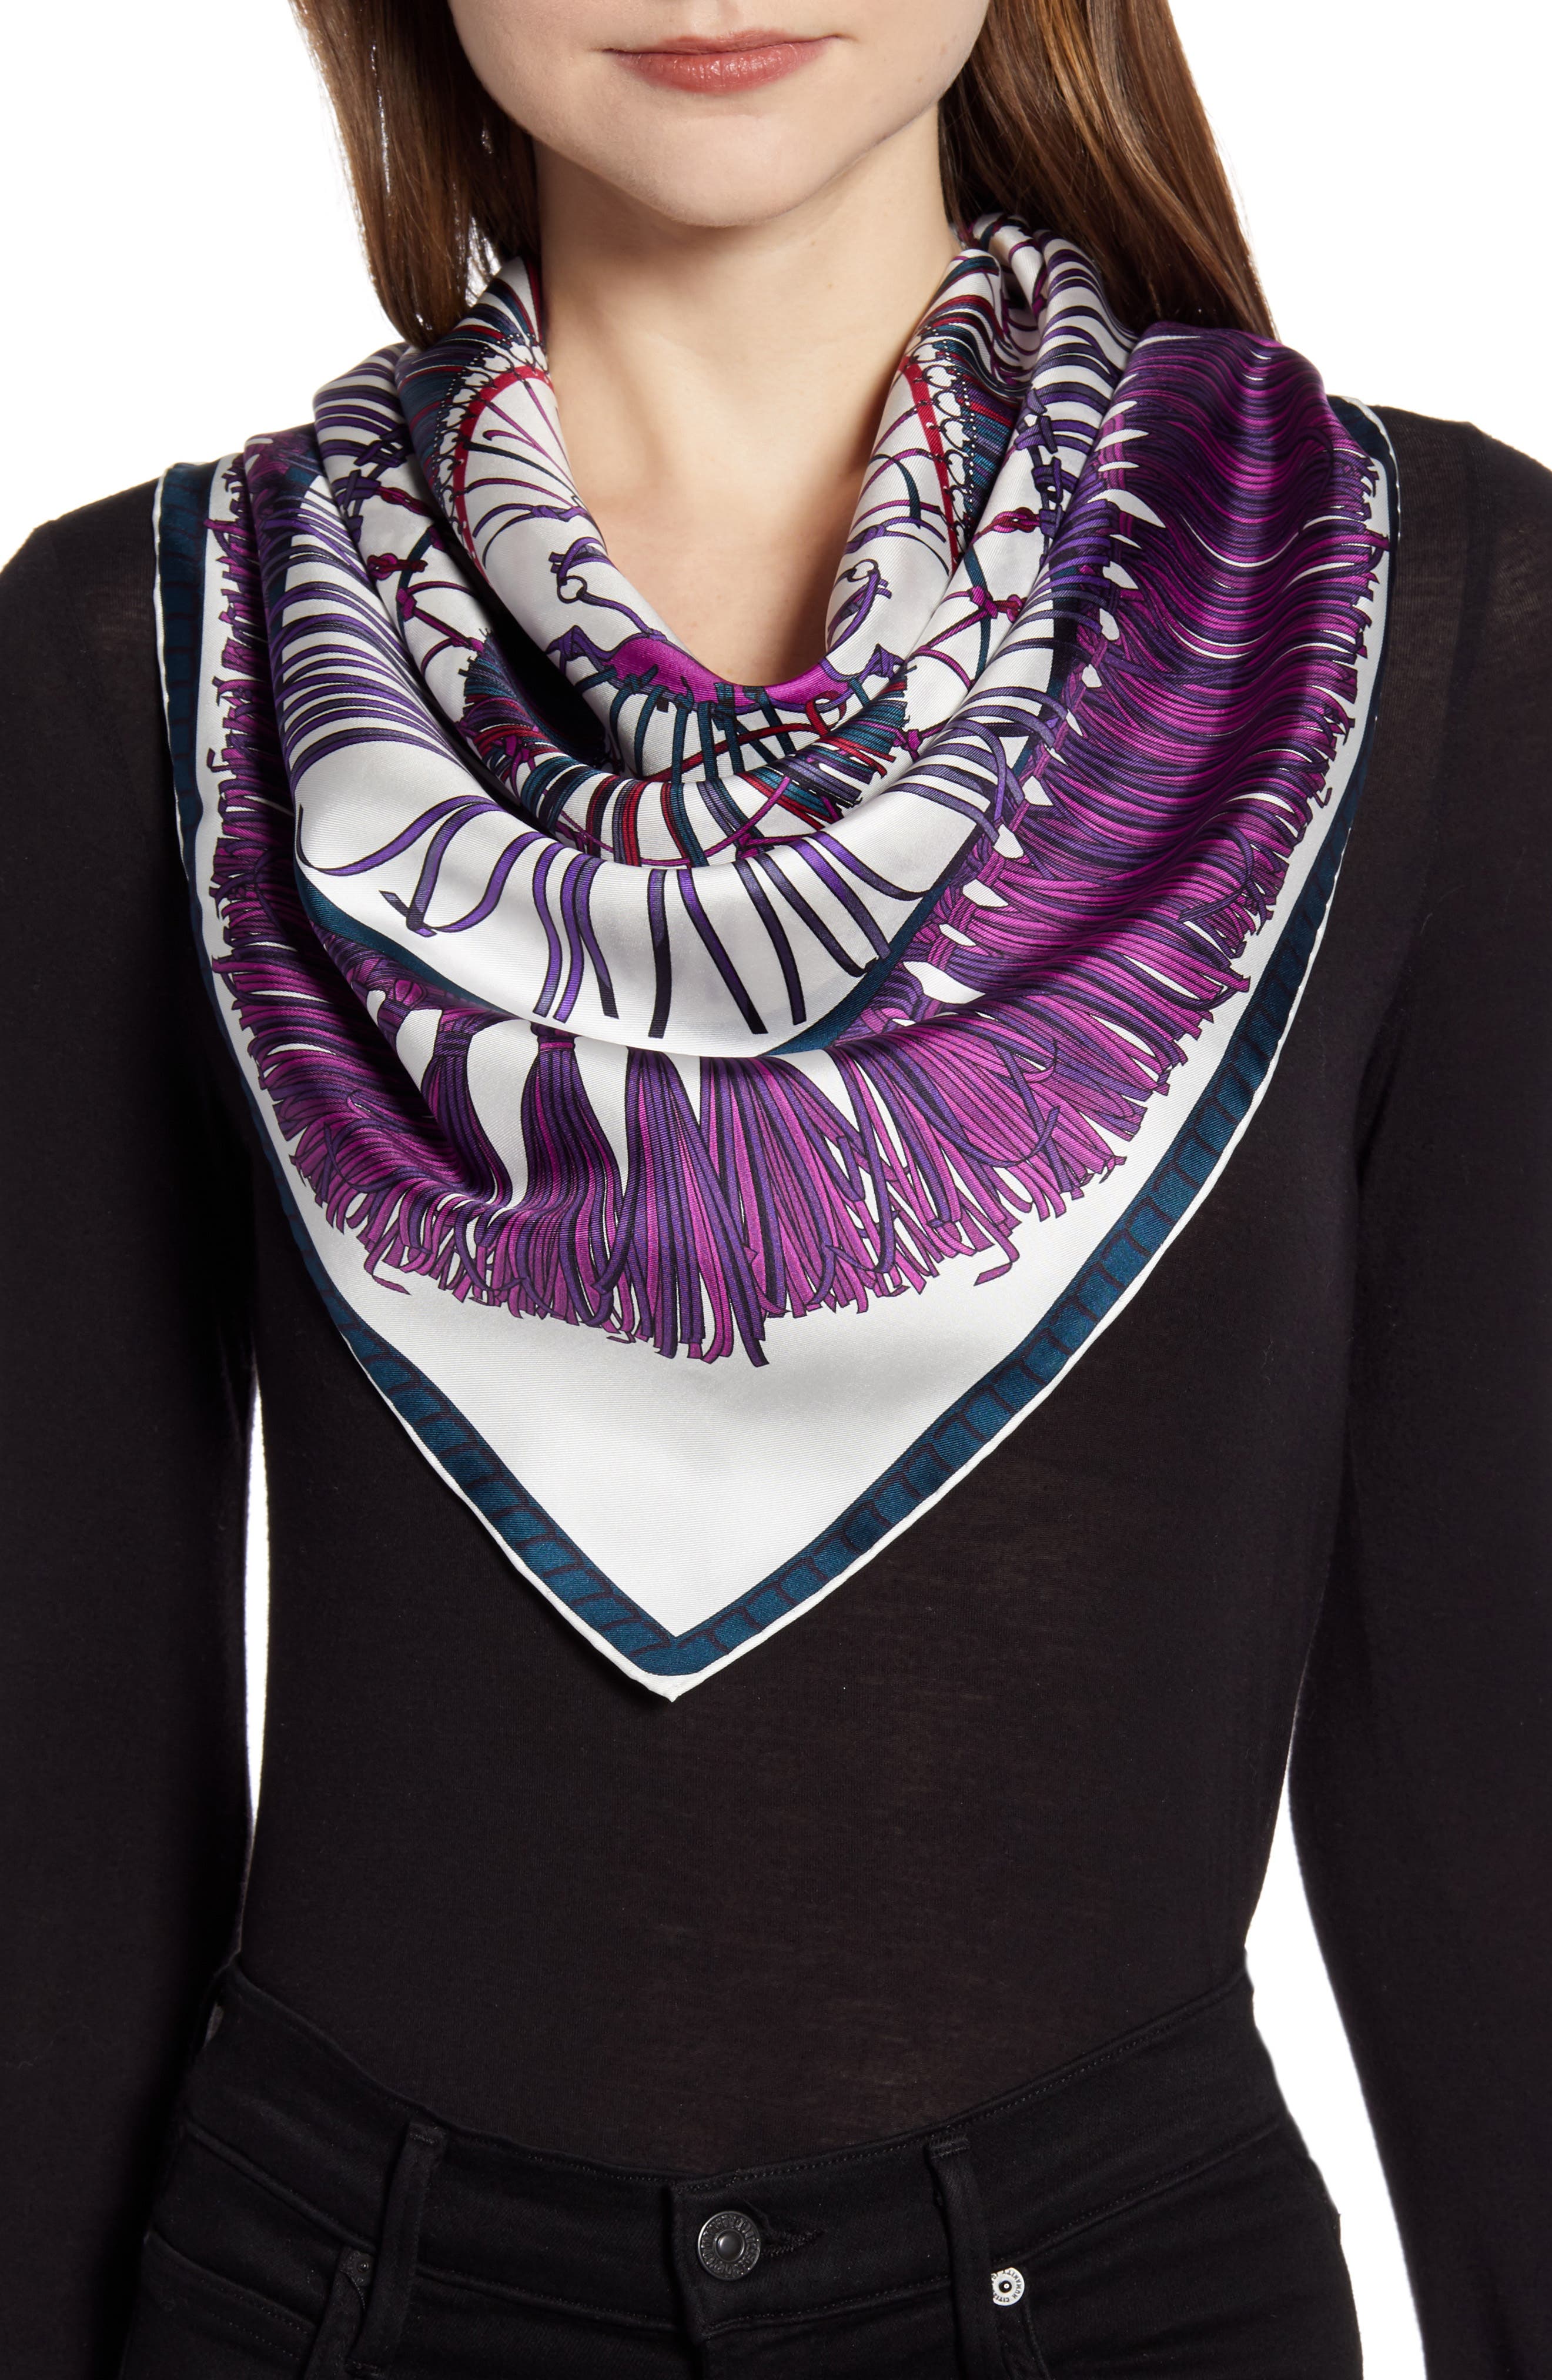 longchamp scarf price